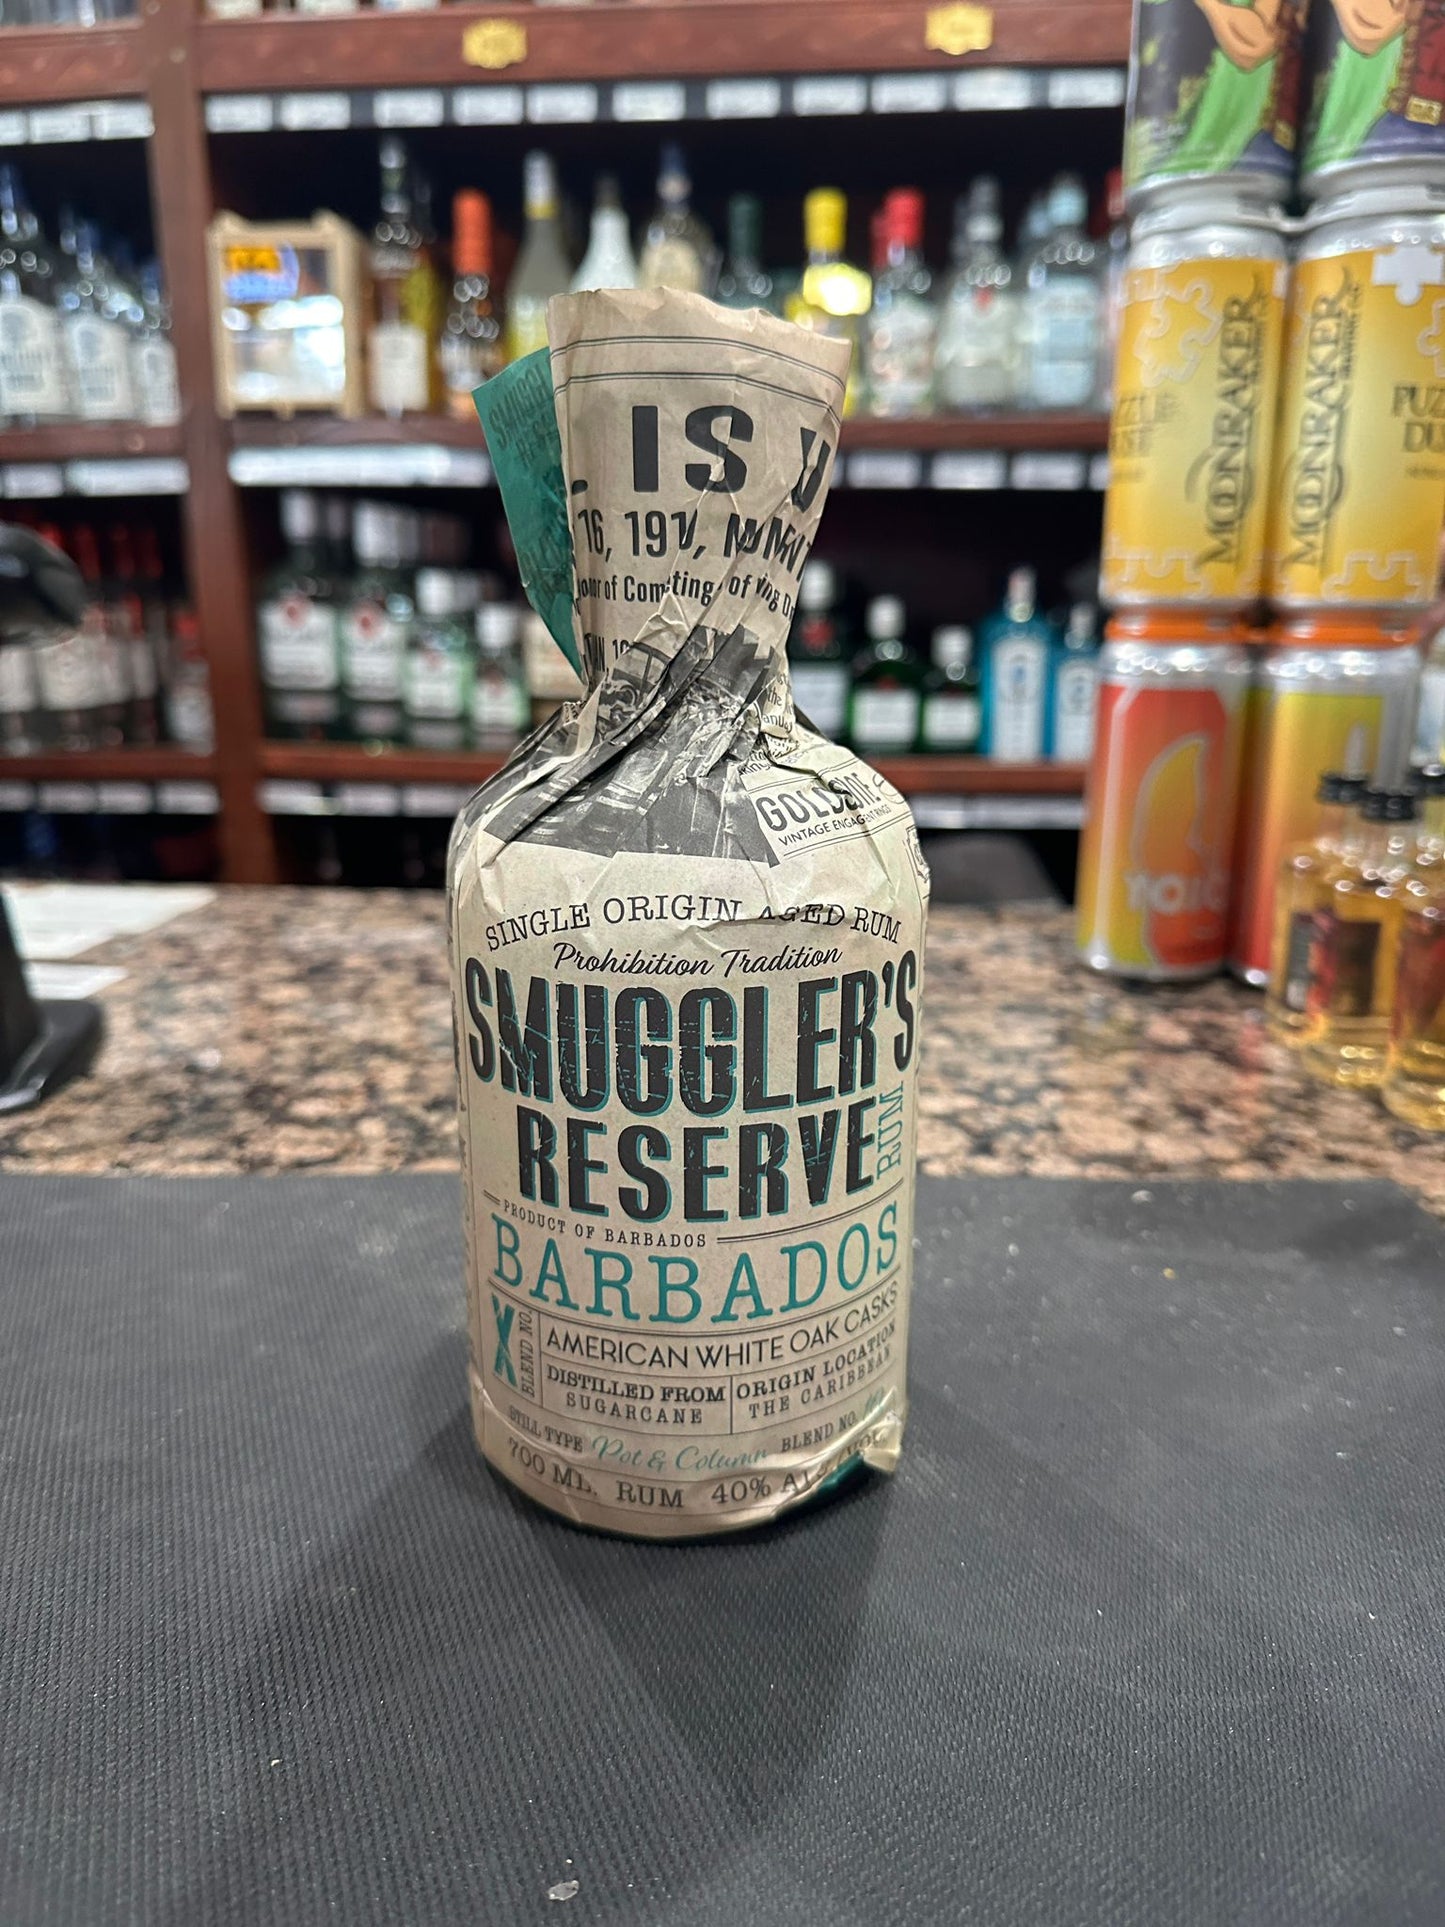 Smuggler's Reserve Barbados Single Origin Aged Rum 700ml